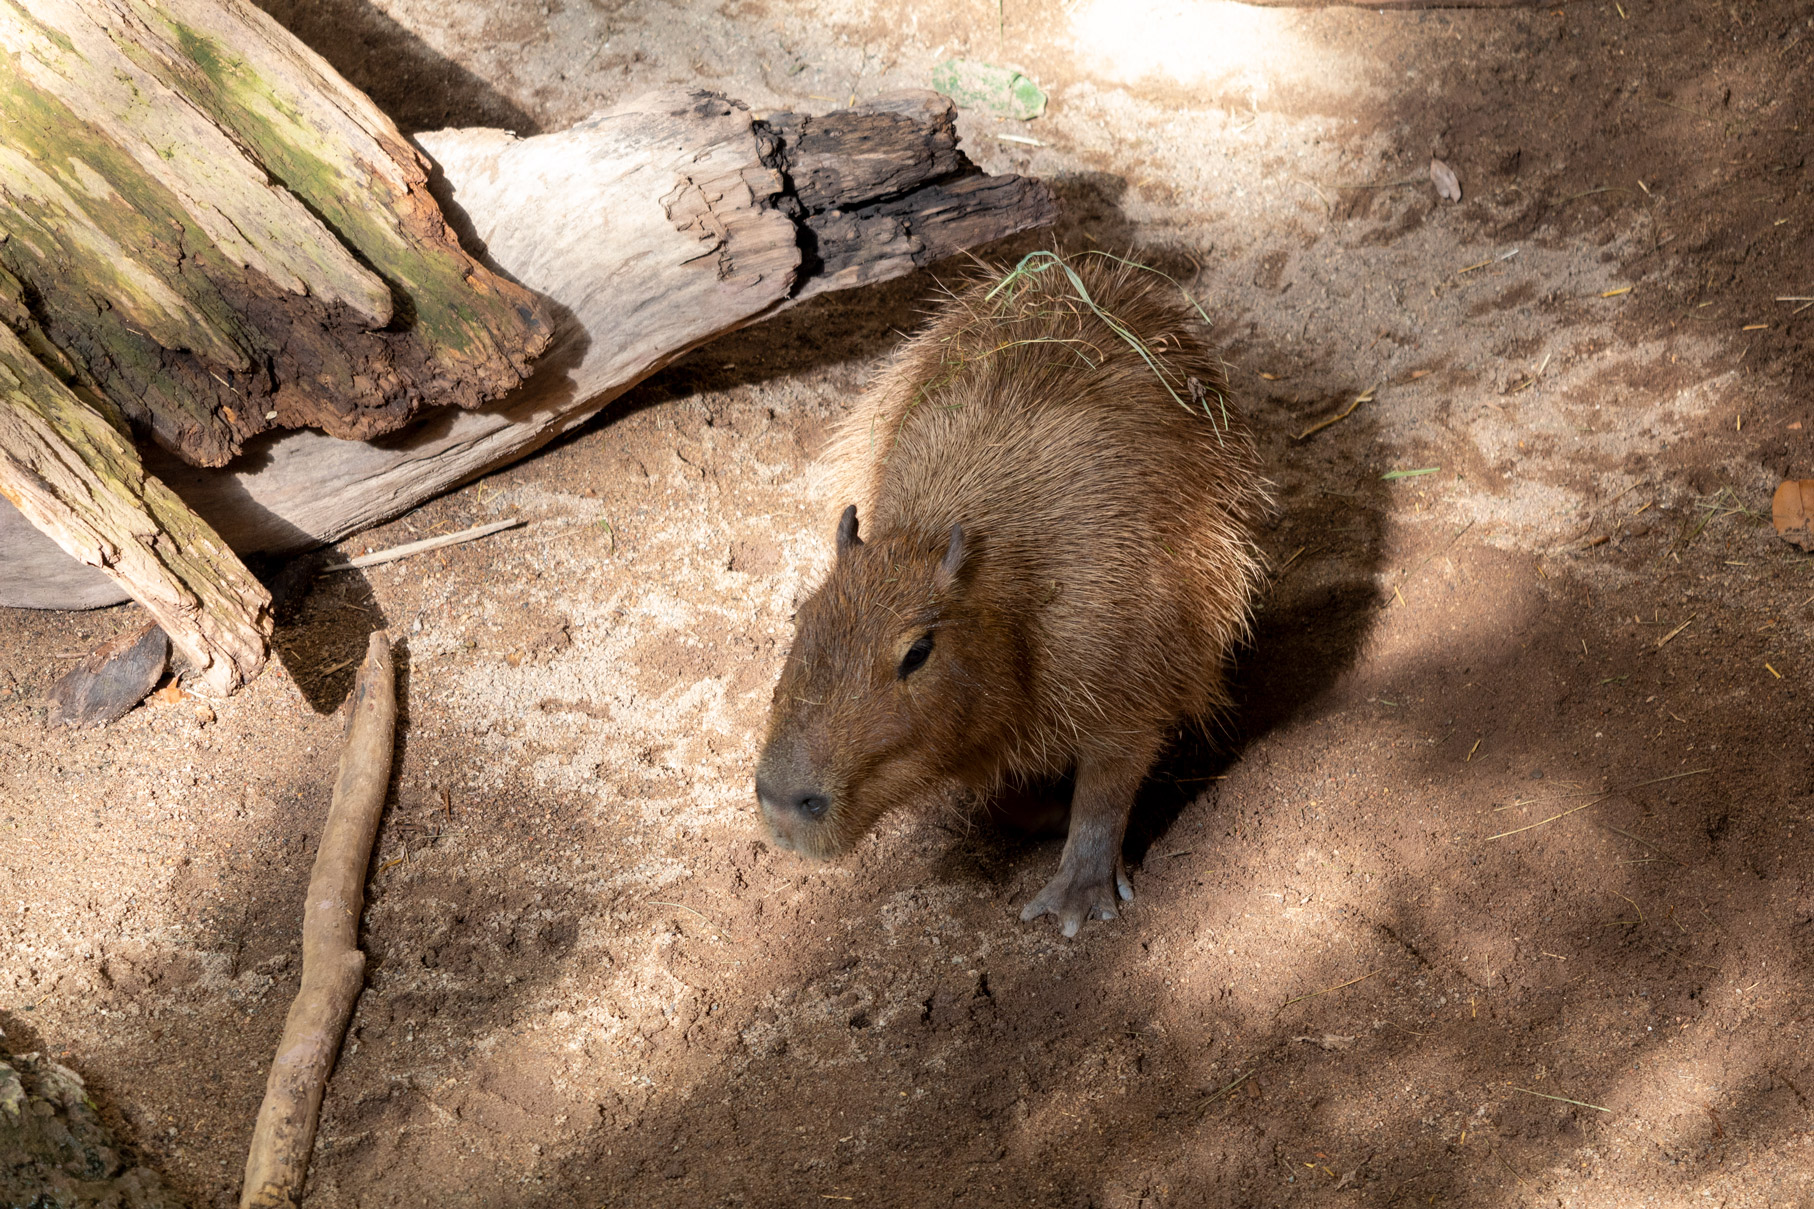 Capybara walking on a sandy beach beside large pieces of driftwood